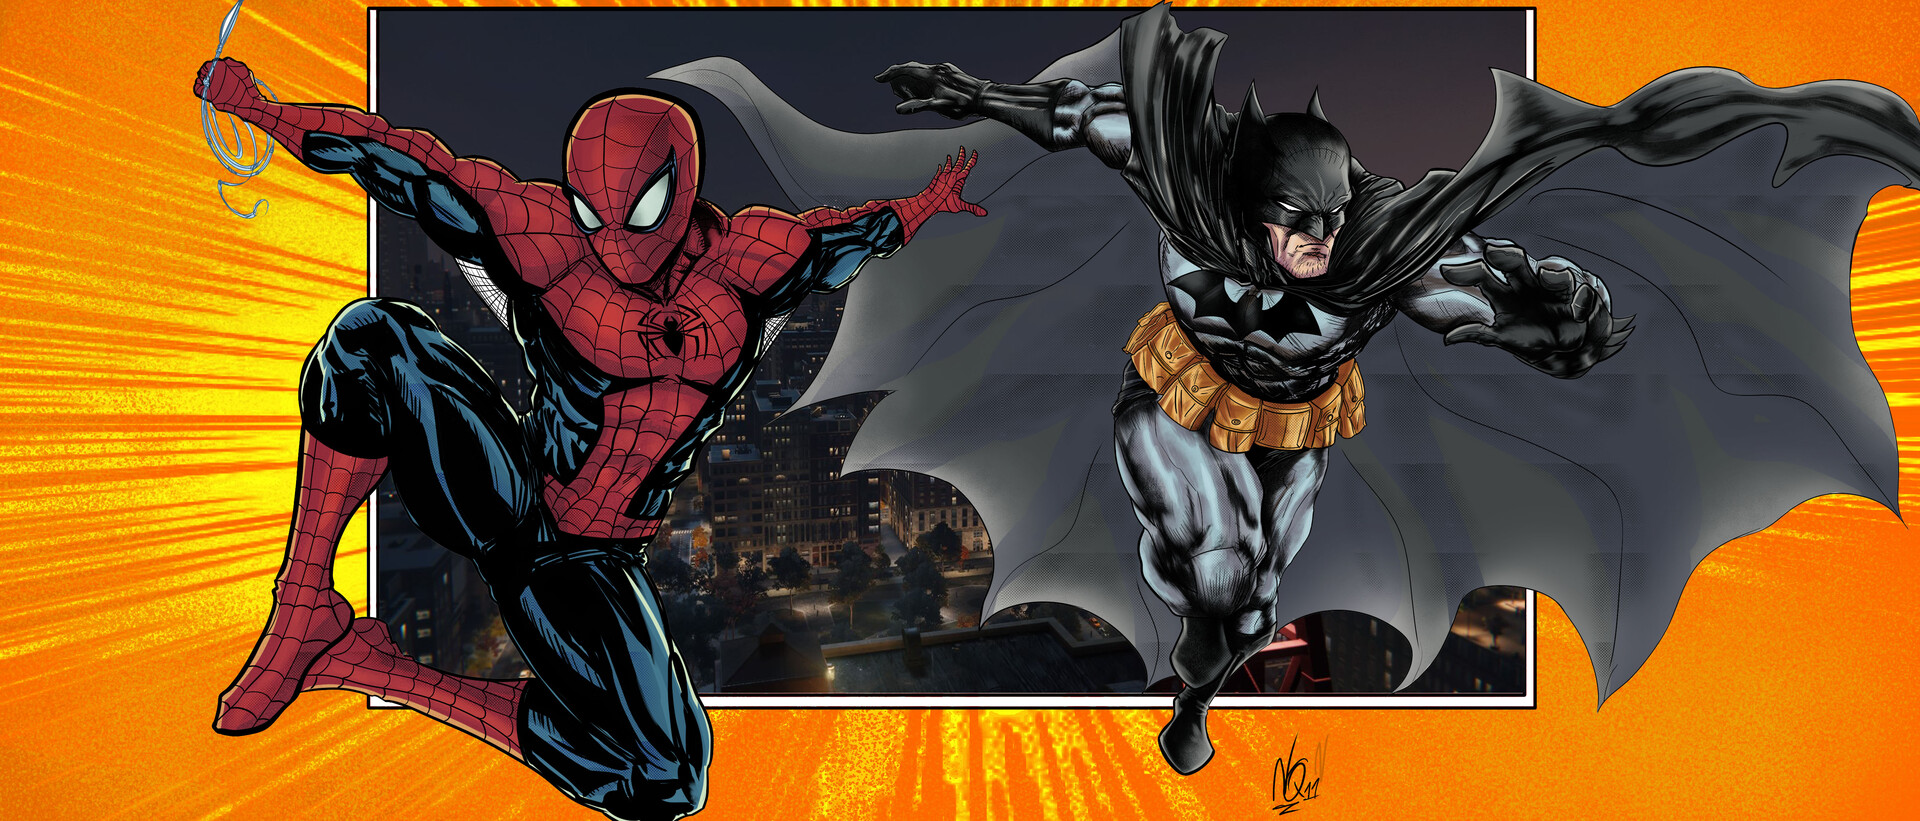 ArtStation - batman and spiderman team up!